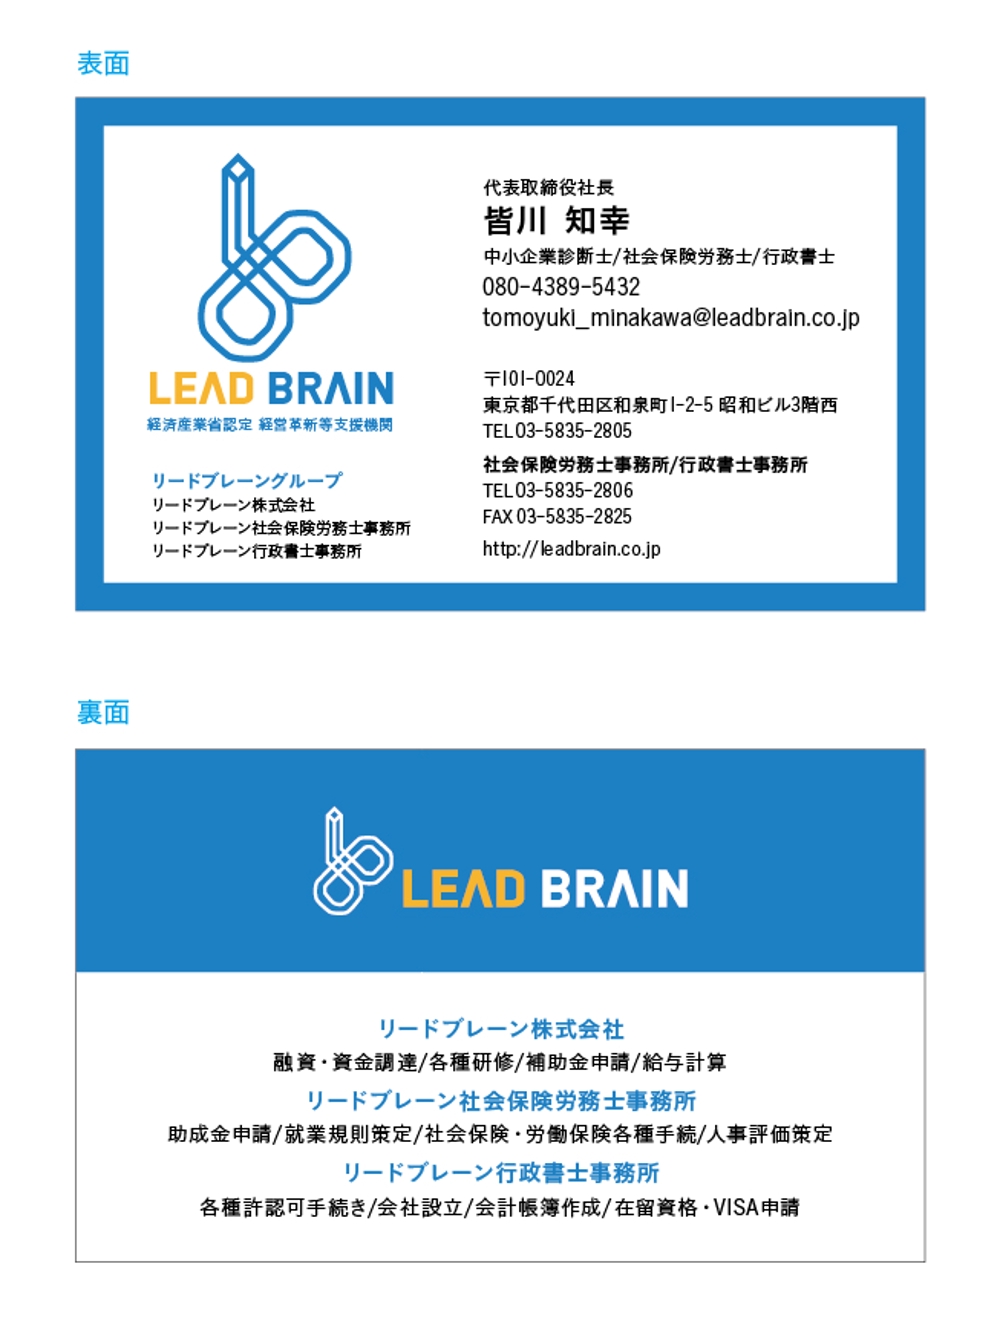 leadbrain_card.jpg